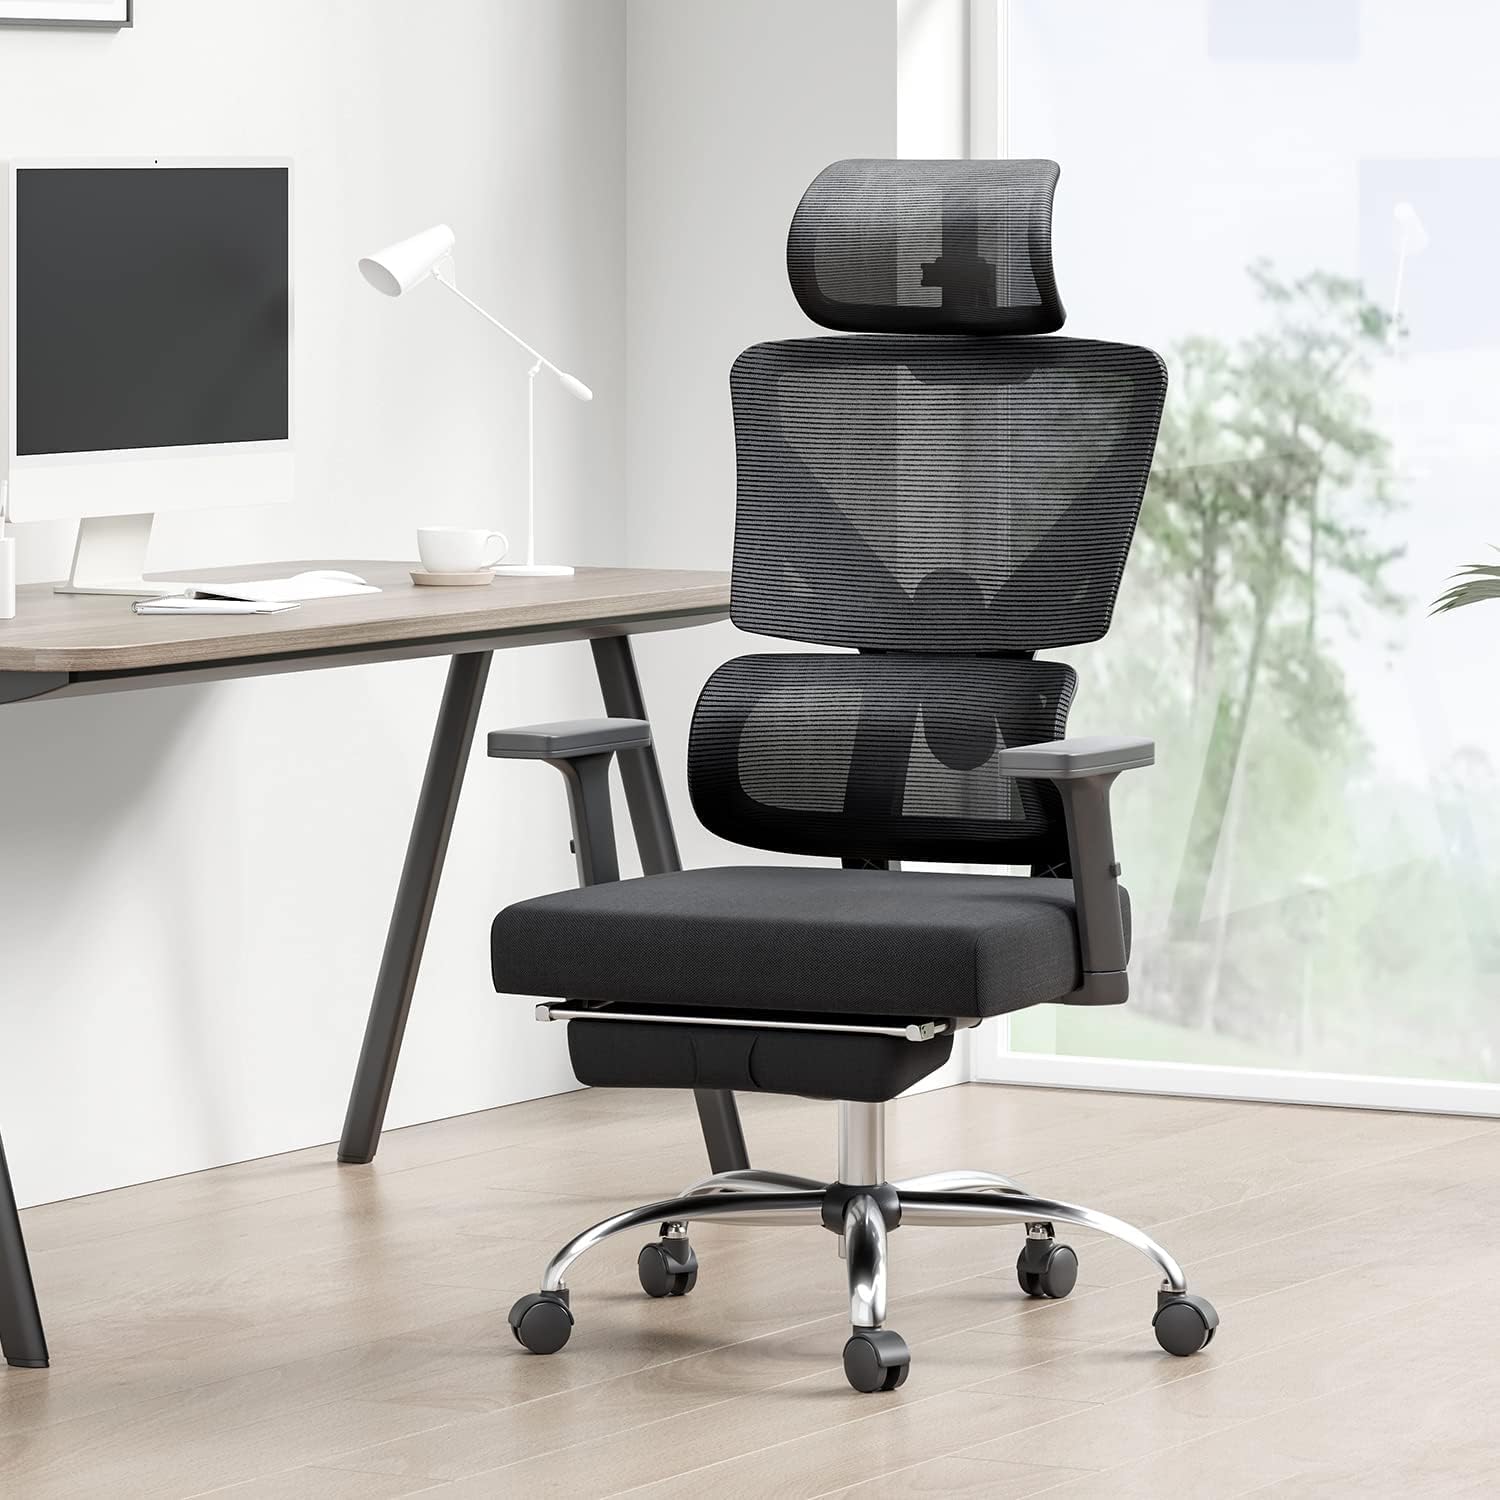 Hbada Desk Chair with Lumbar Support,Black